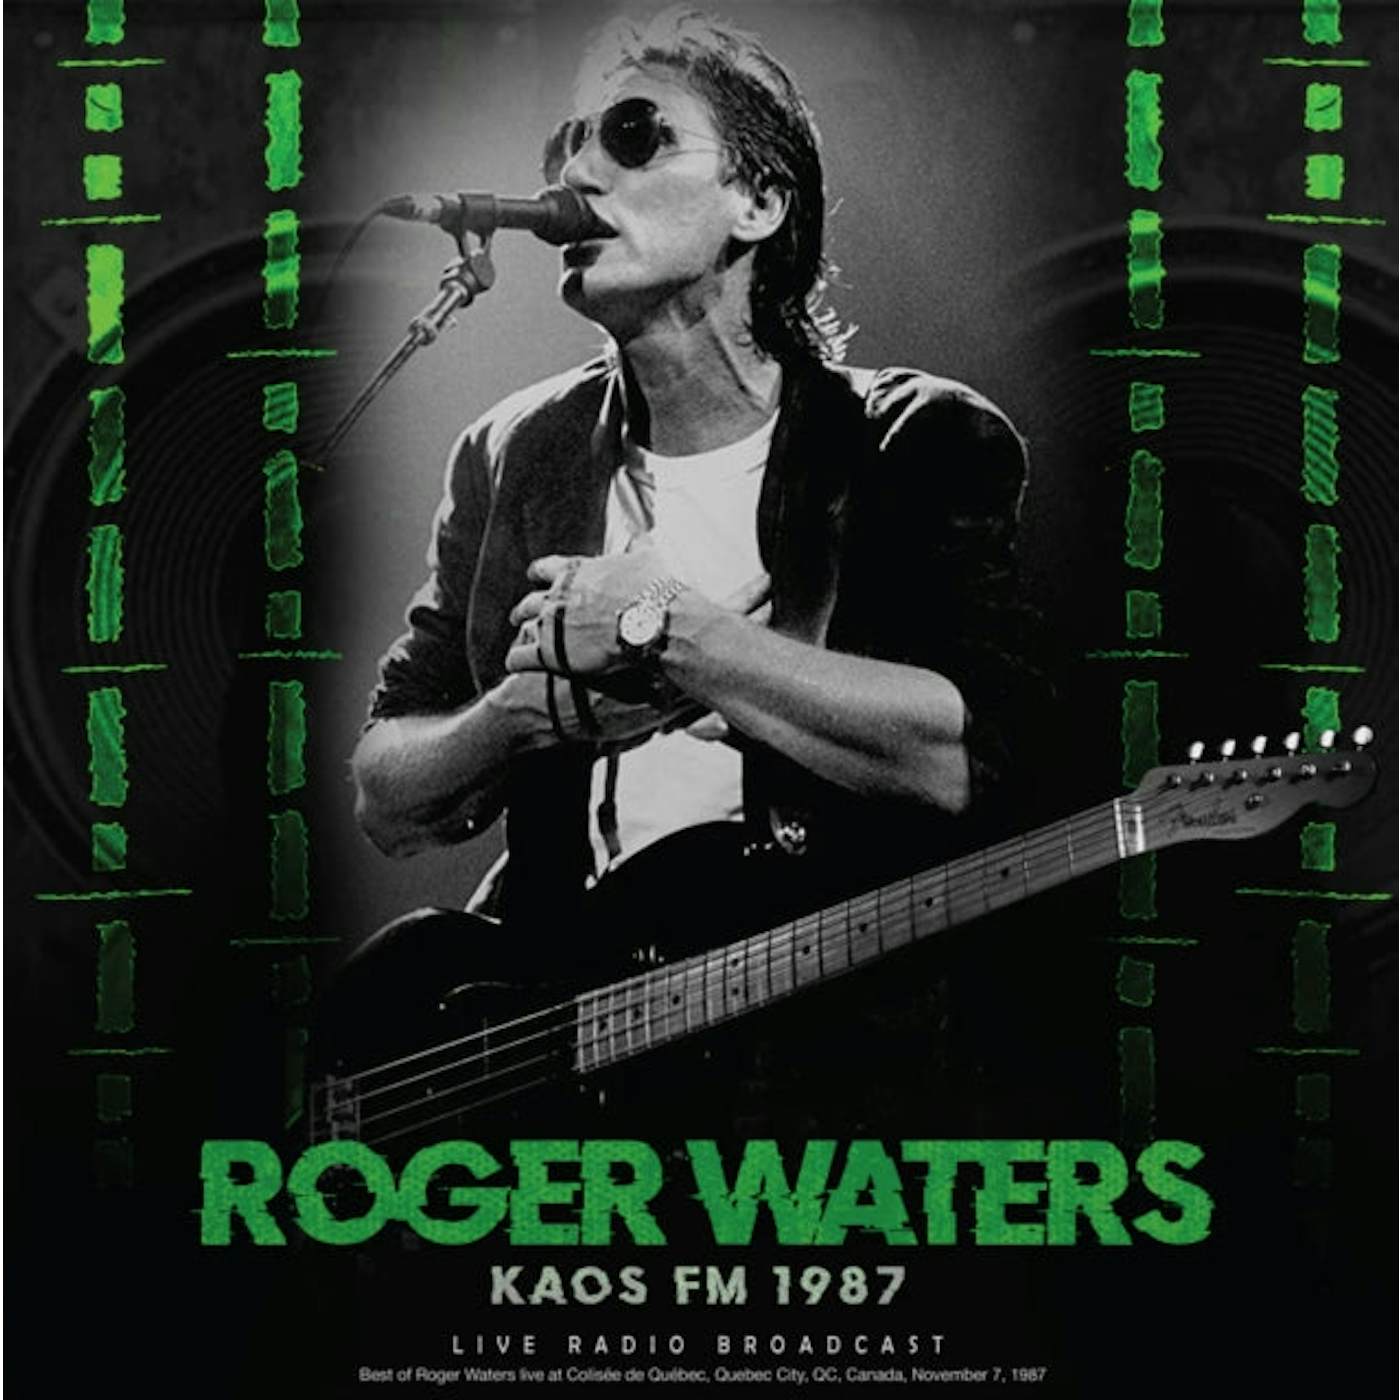 Roger Waters LP Vinyl Record - KAOS FM 19 87